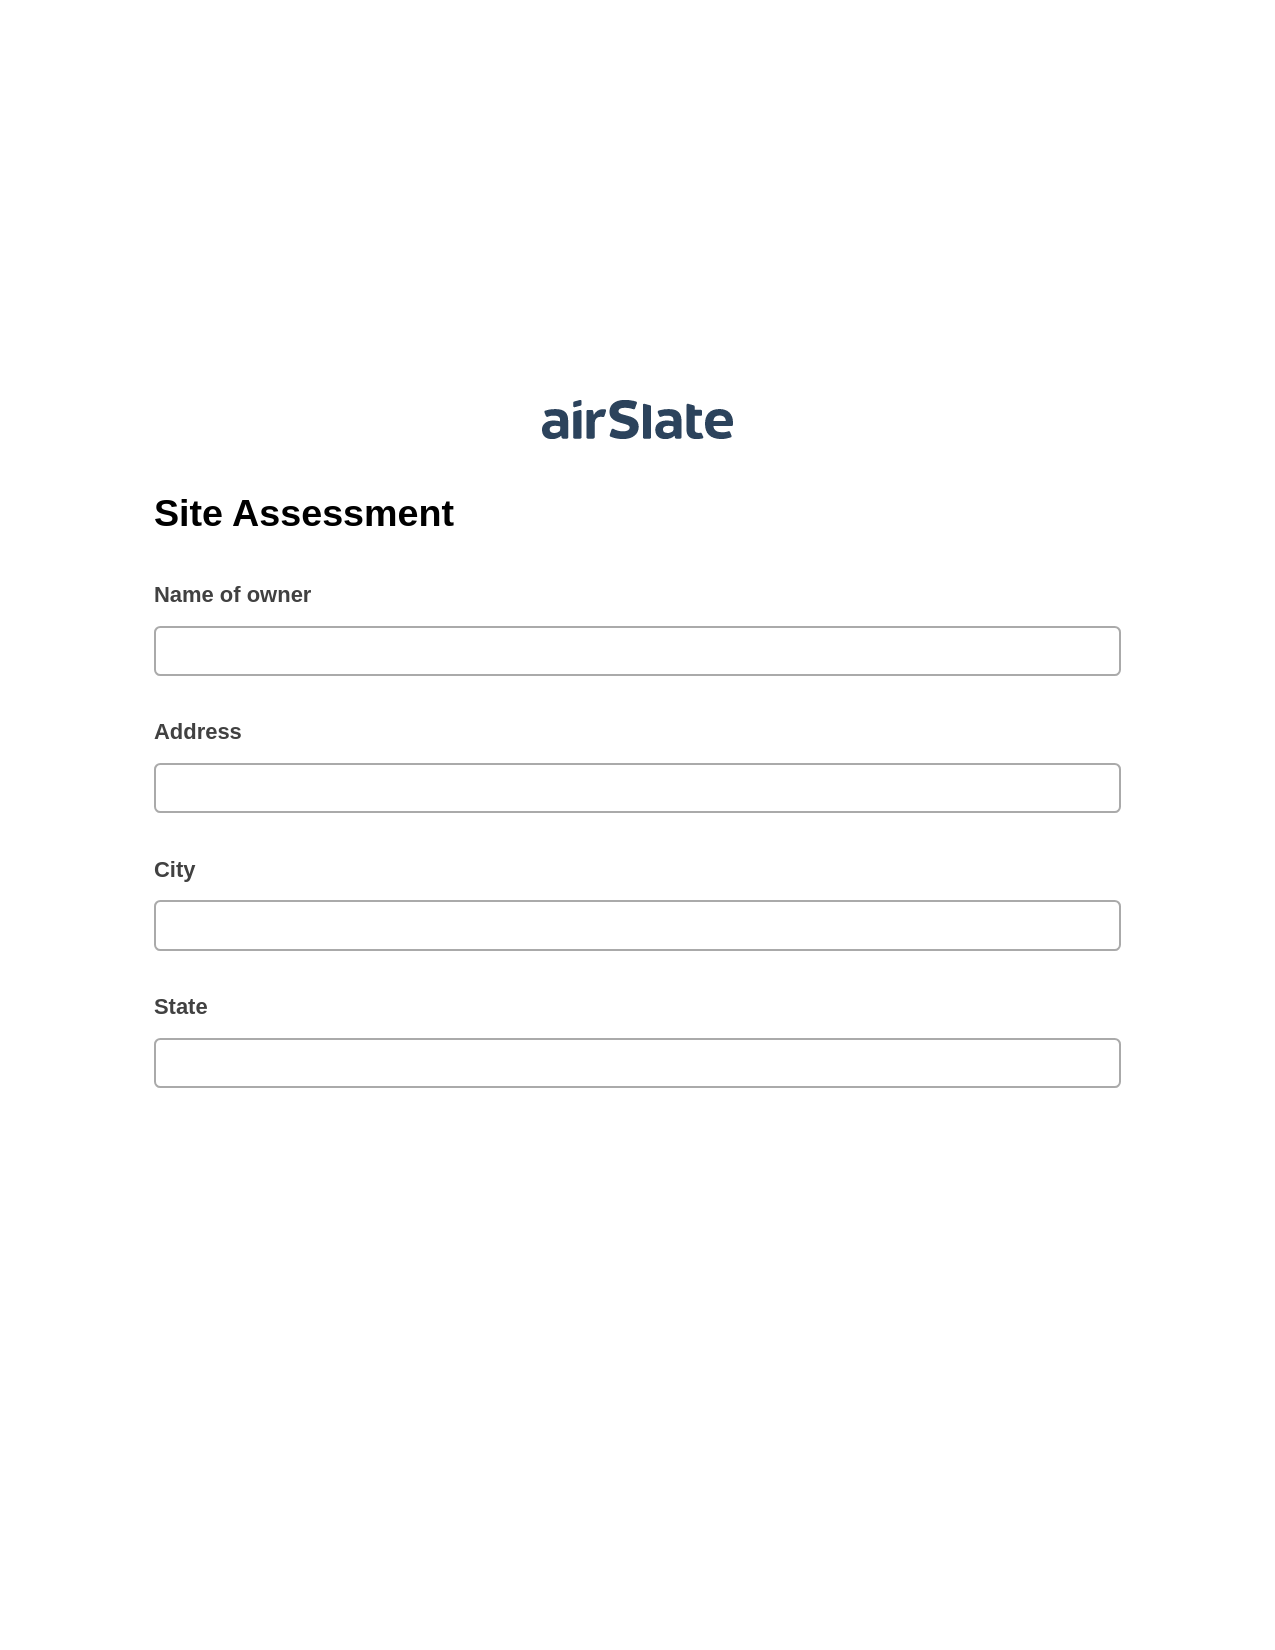 Site Assessment Pre-fill Document Bot, Mailchimp send Campaign bot, Export to Smartsheet